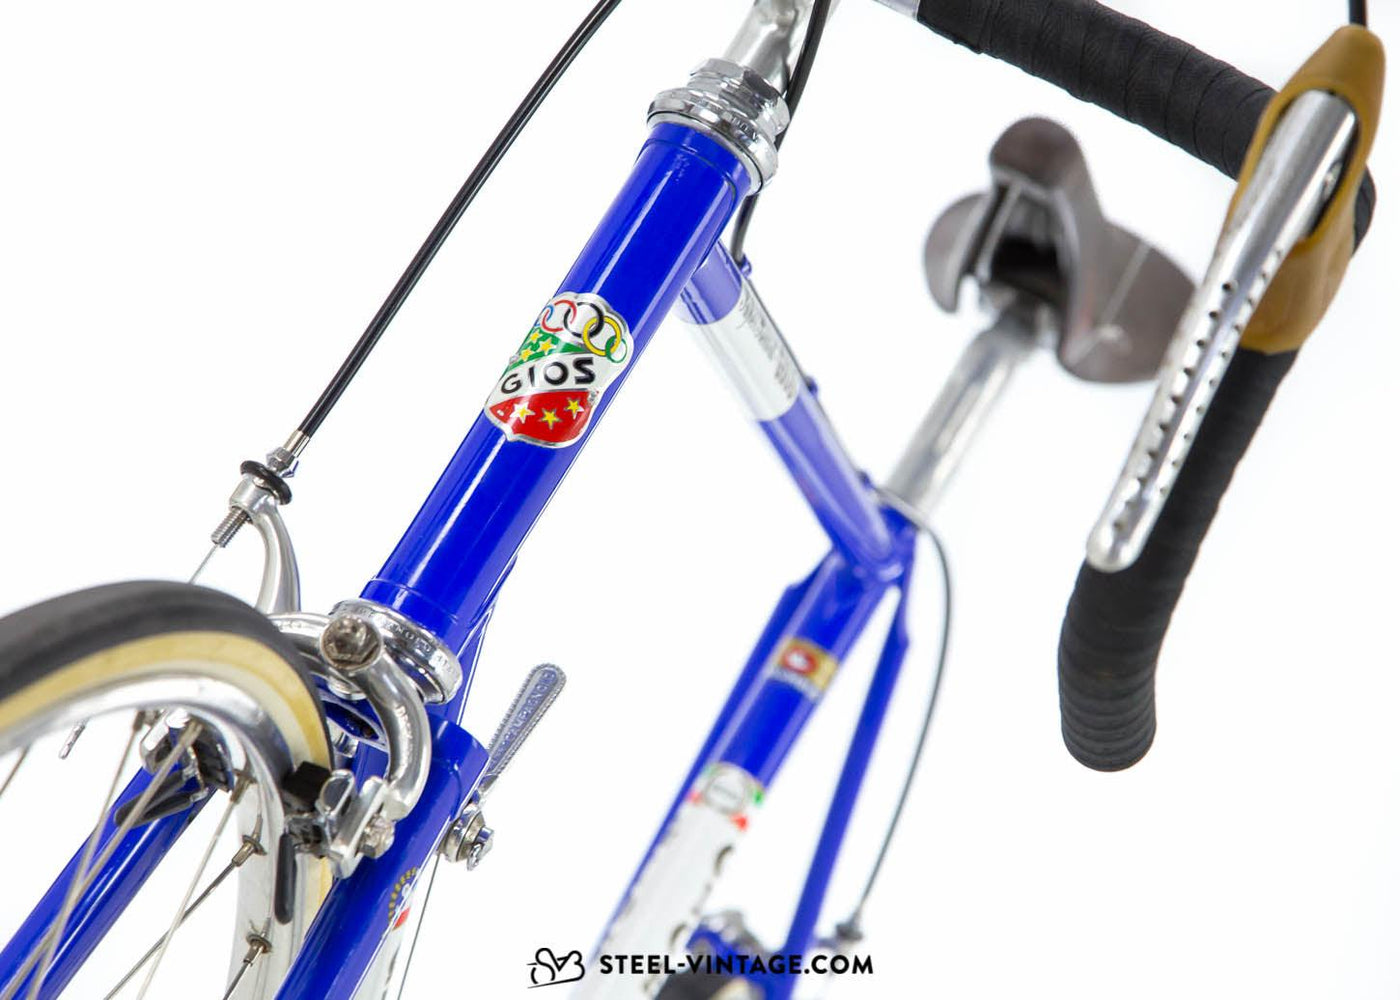 Steel Vintage Bikes - Gios Torino Fine Vintage Road Bicycle from 1980s